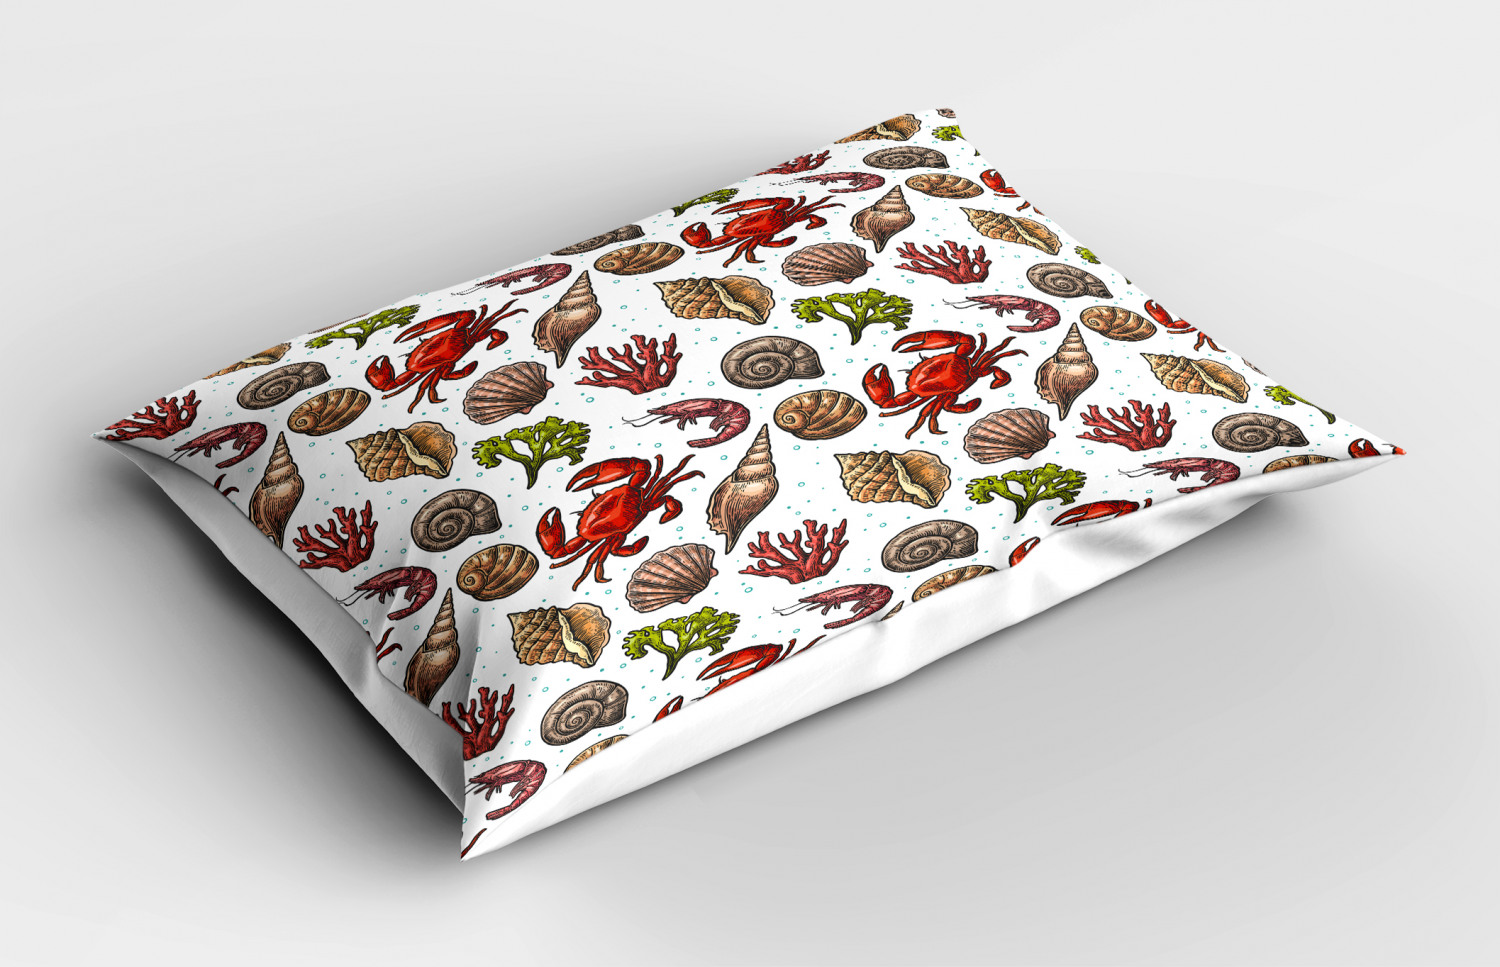 Details about   Sea Shells Pillow Sham Decorative Pillowcase 3 Sizes Bedroom Decor Ambesonne 